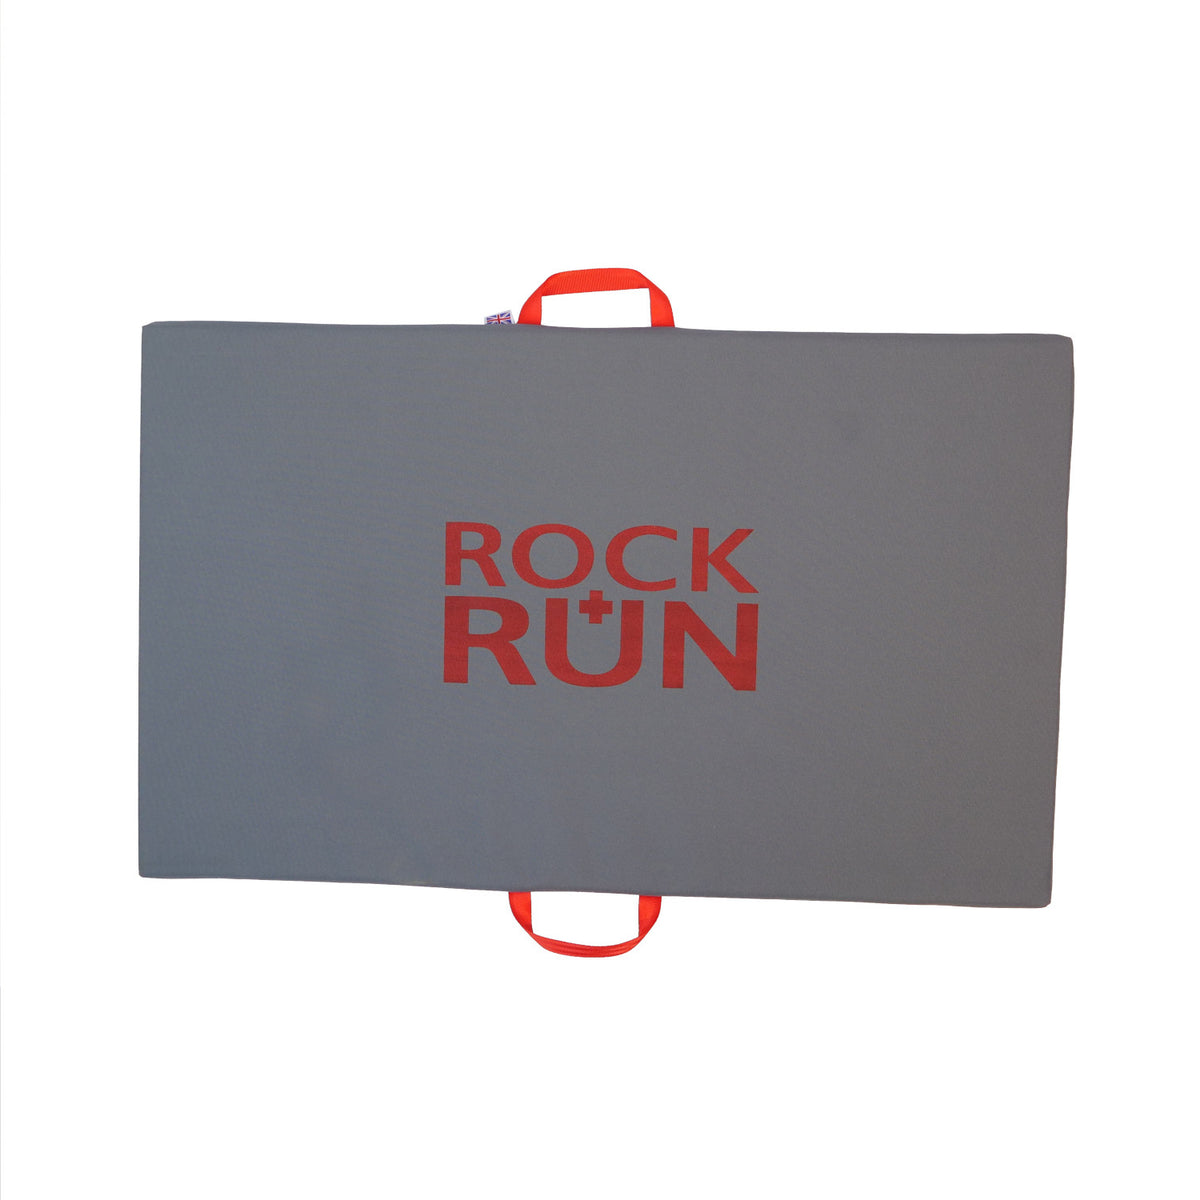 Rock + Run Showdown Pad in grey with red logo